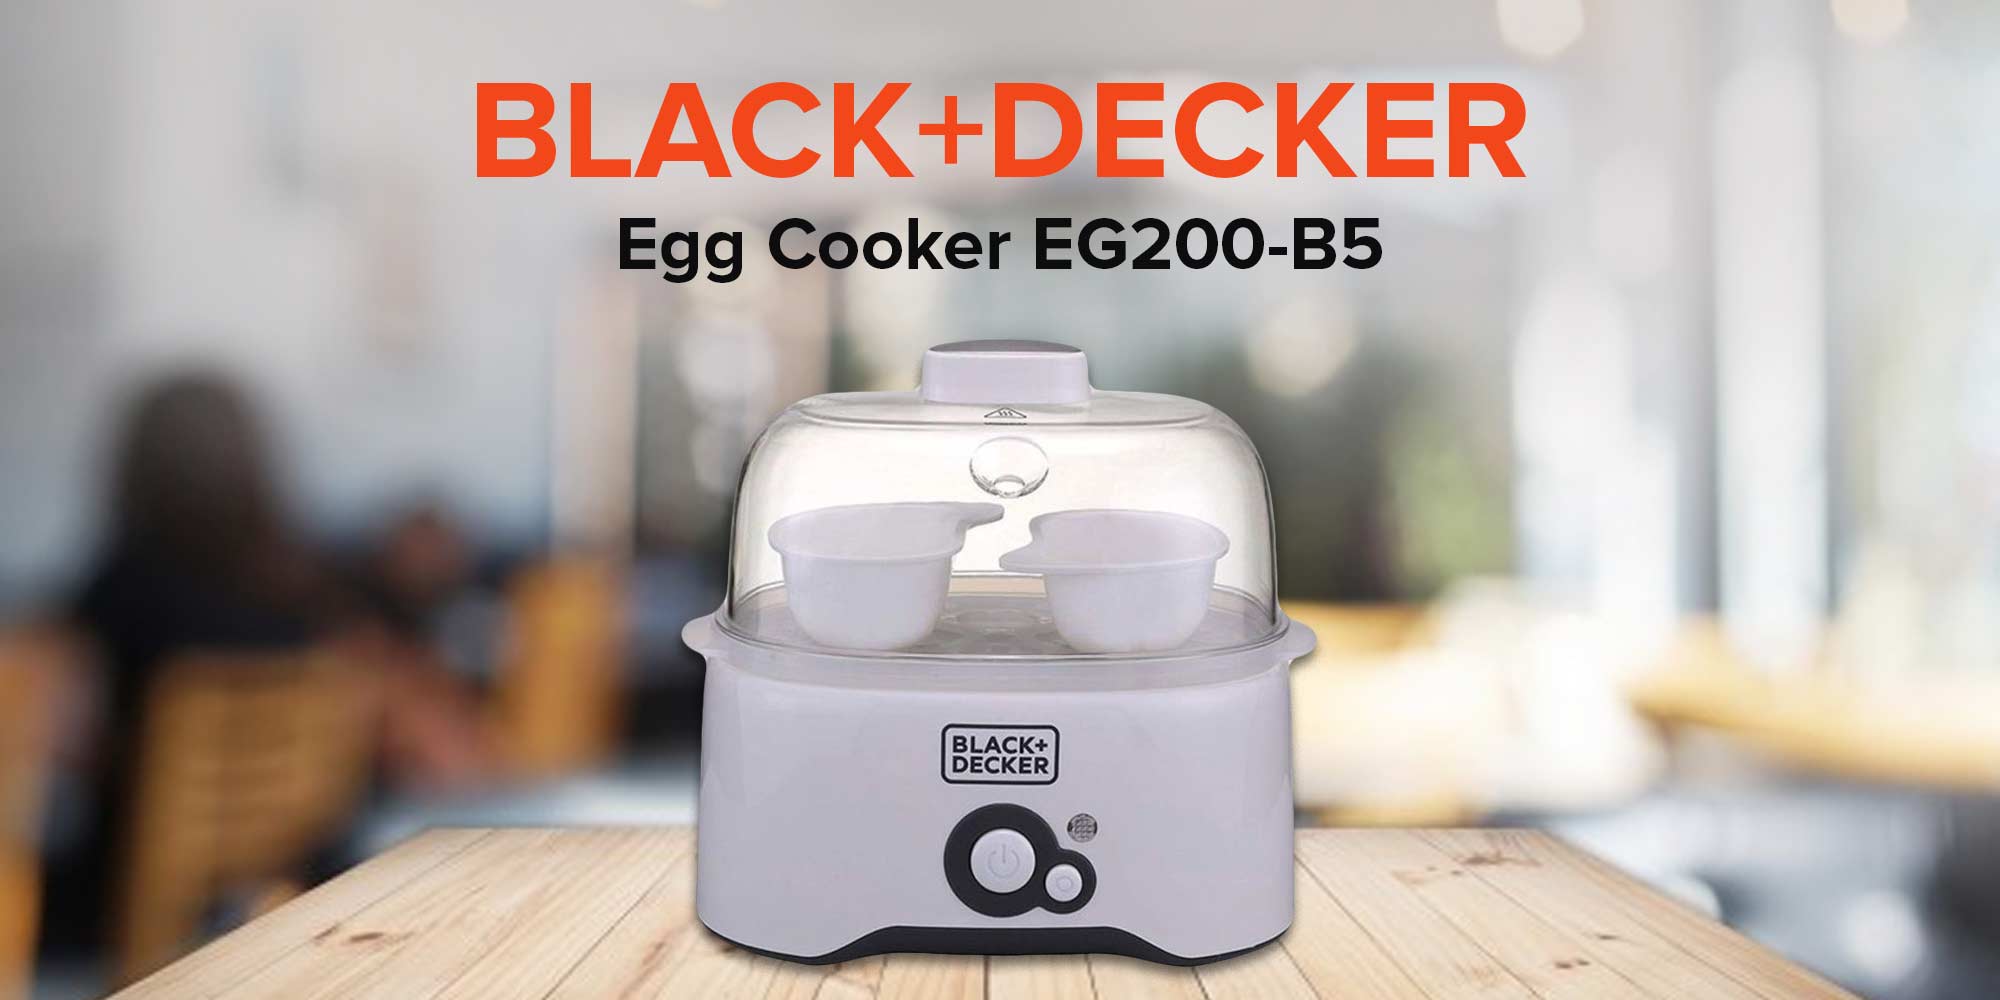 Akebono Microwave Egg Cooker 2 Eggs Capacity RE-277 – Japanese Taste